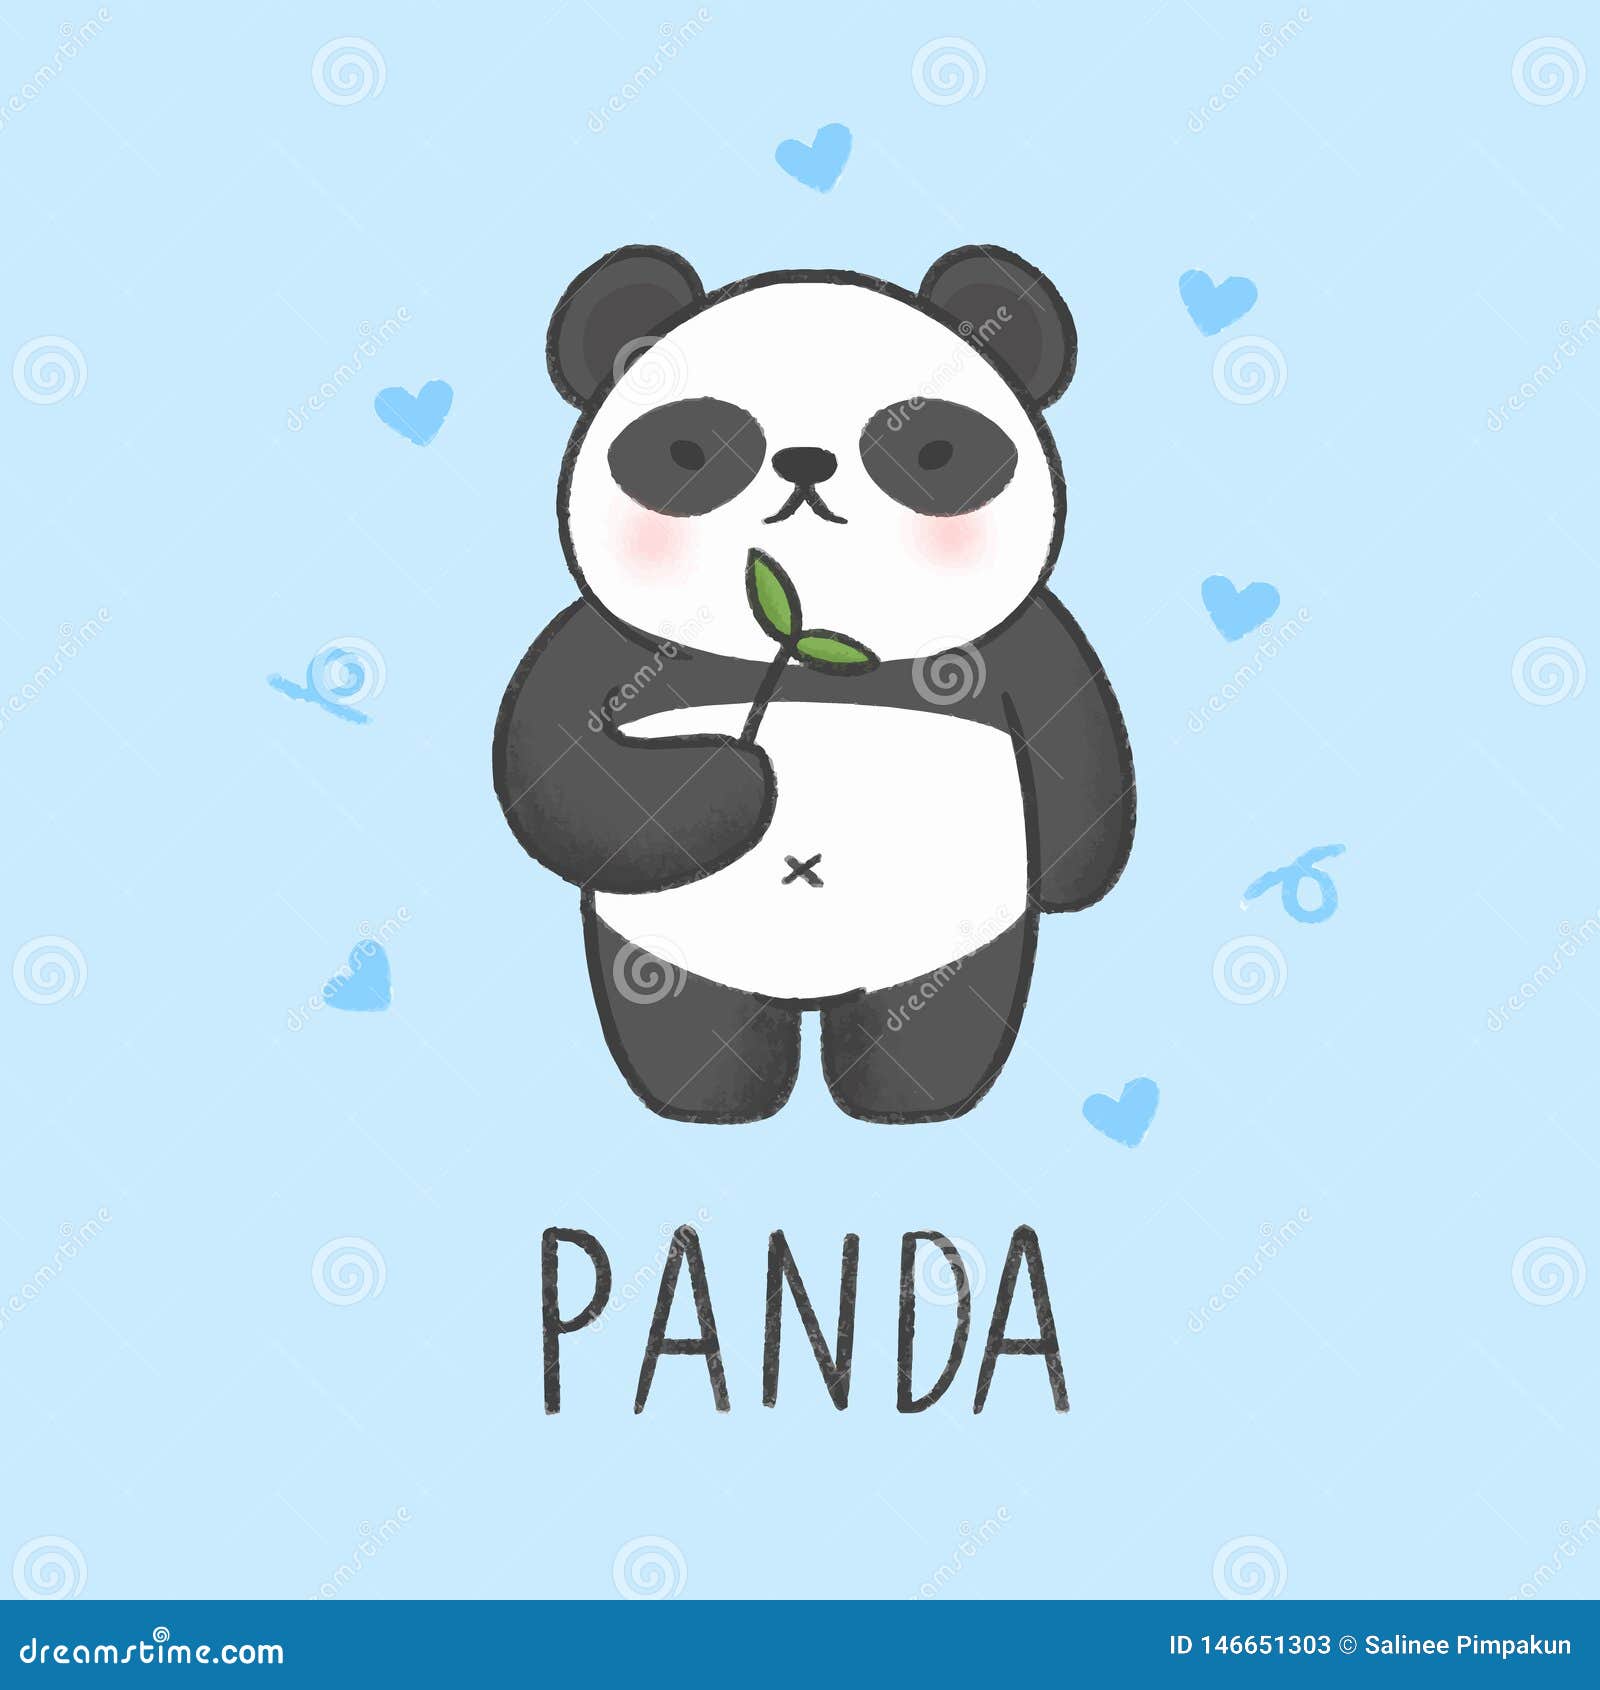 Cute Panda Cartoon Hand Drawn Style Stock Illustration - Illustration of  emotion, childhood: 146651303